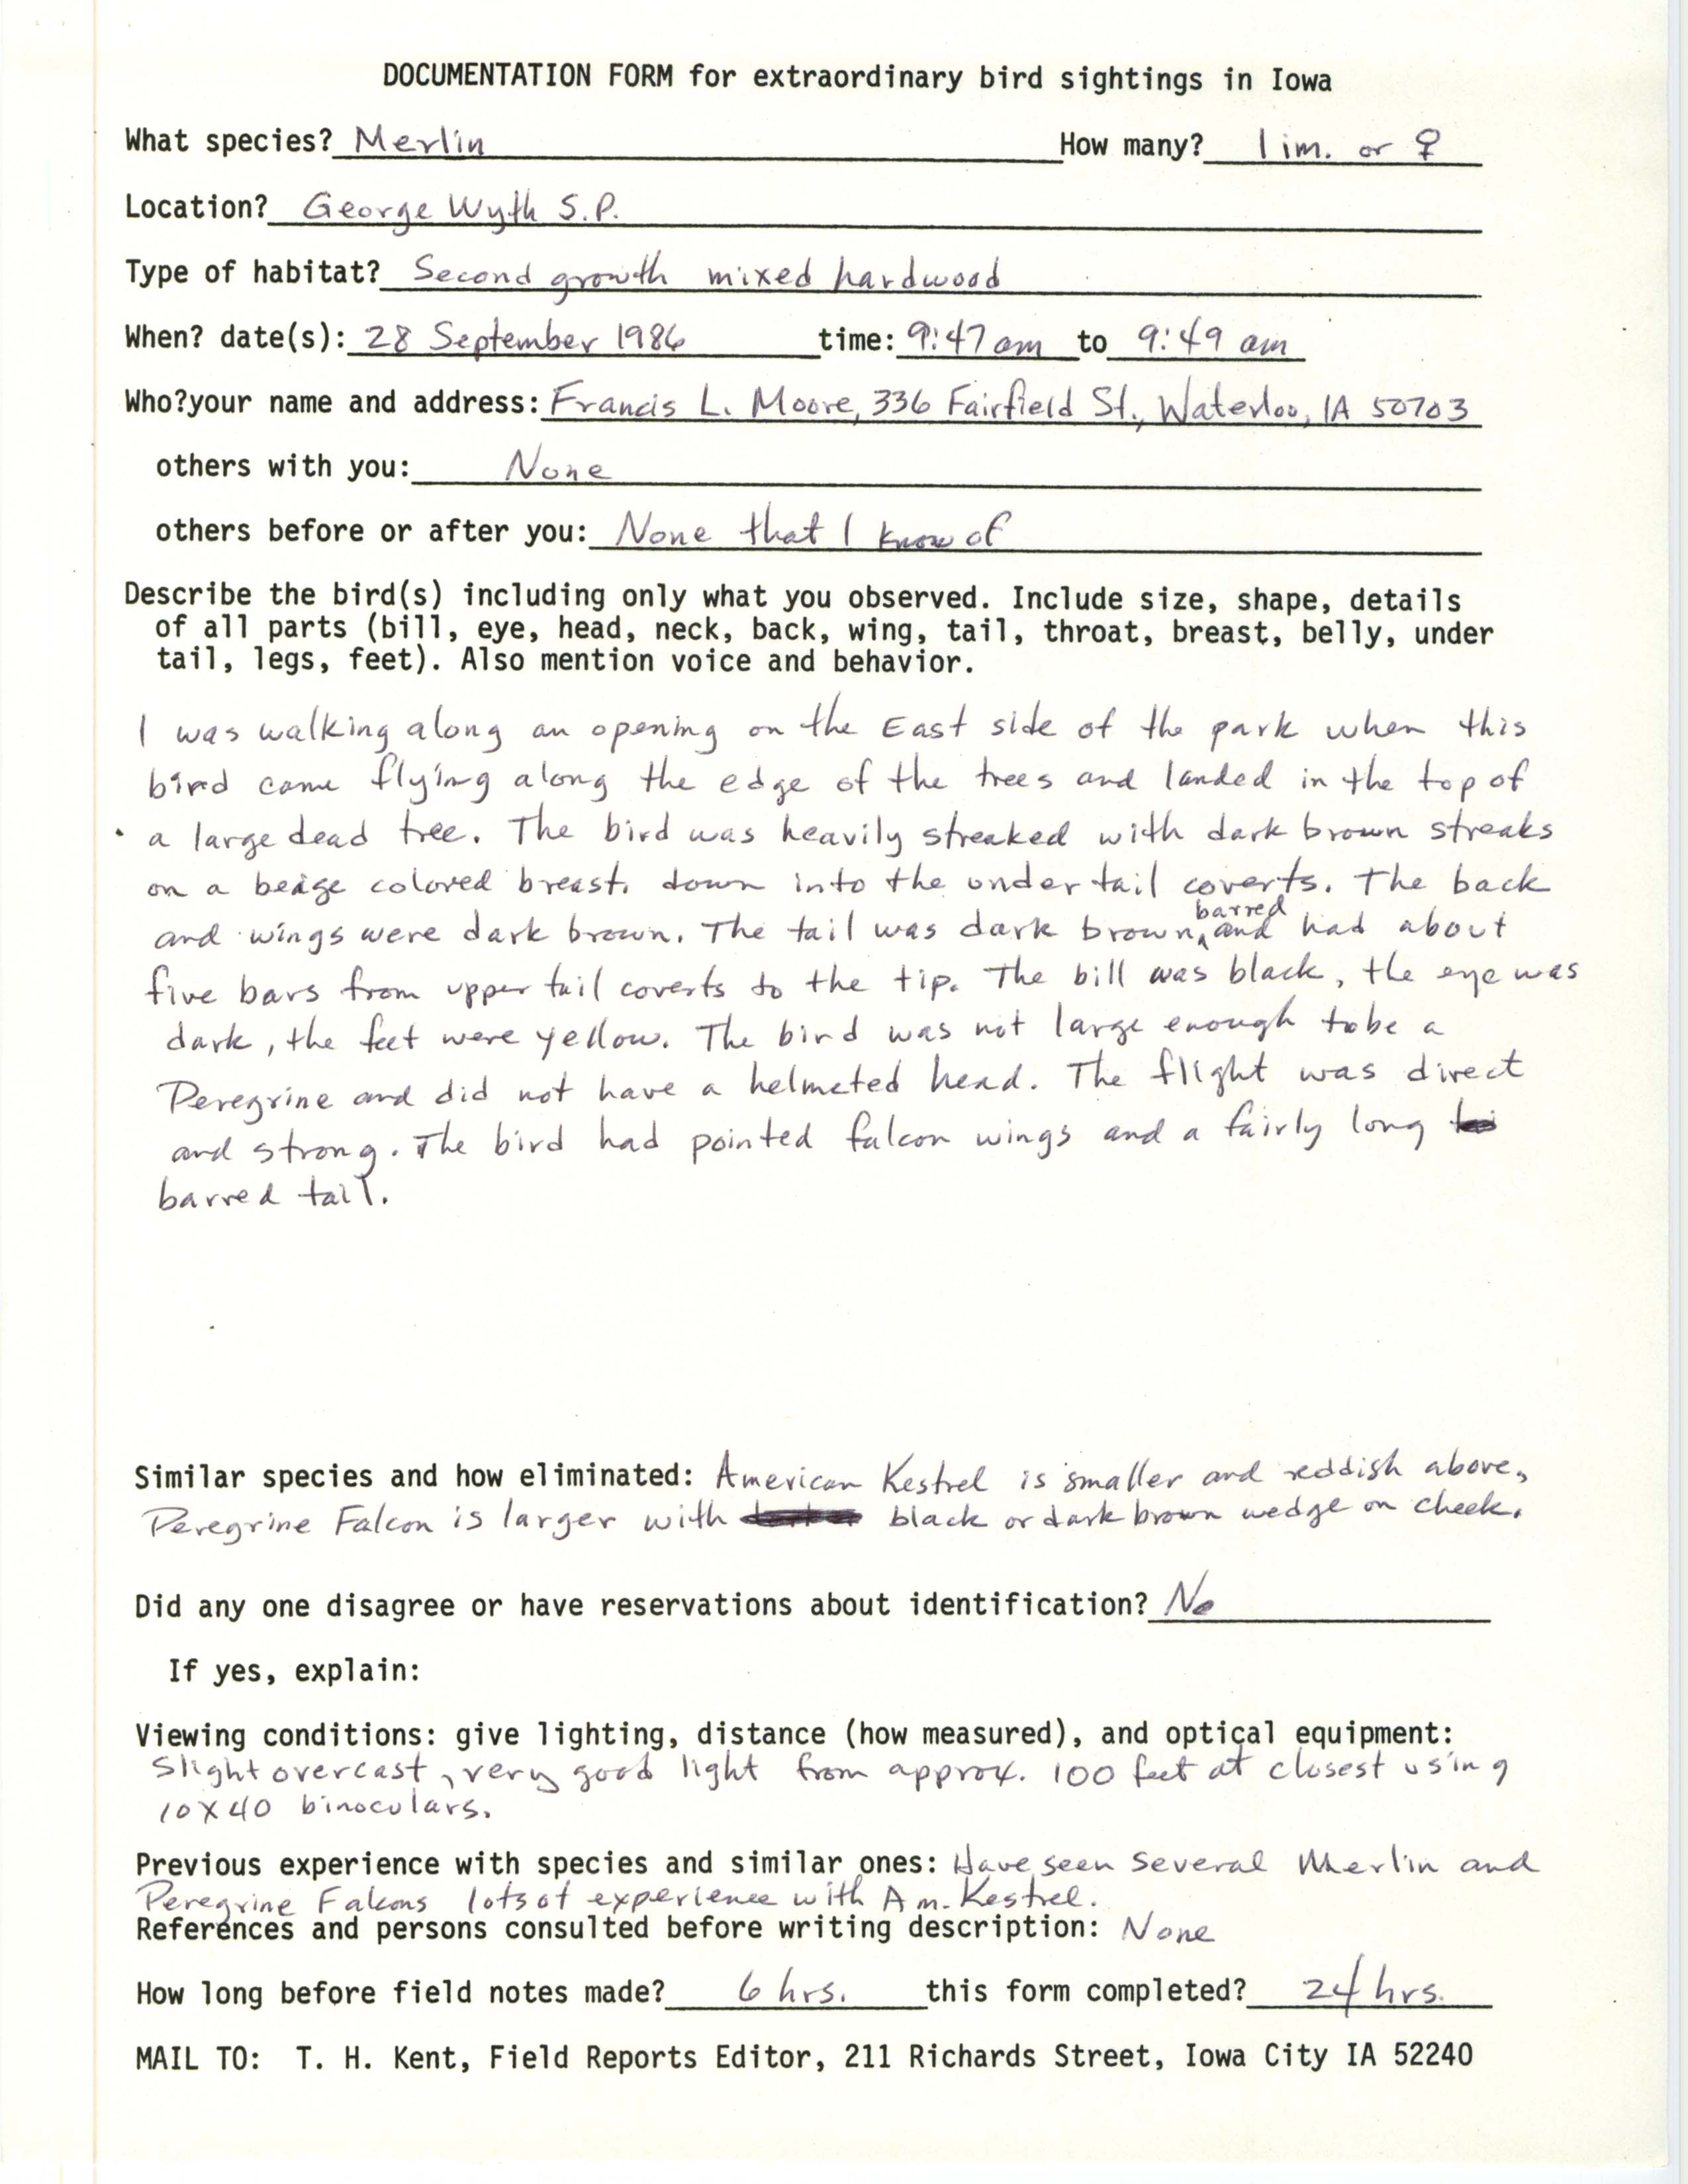 Rare bird documentation form for Merlin at George Wyth State Park, 1986